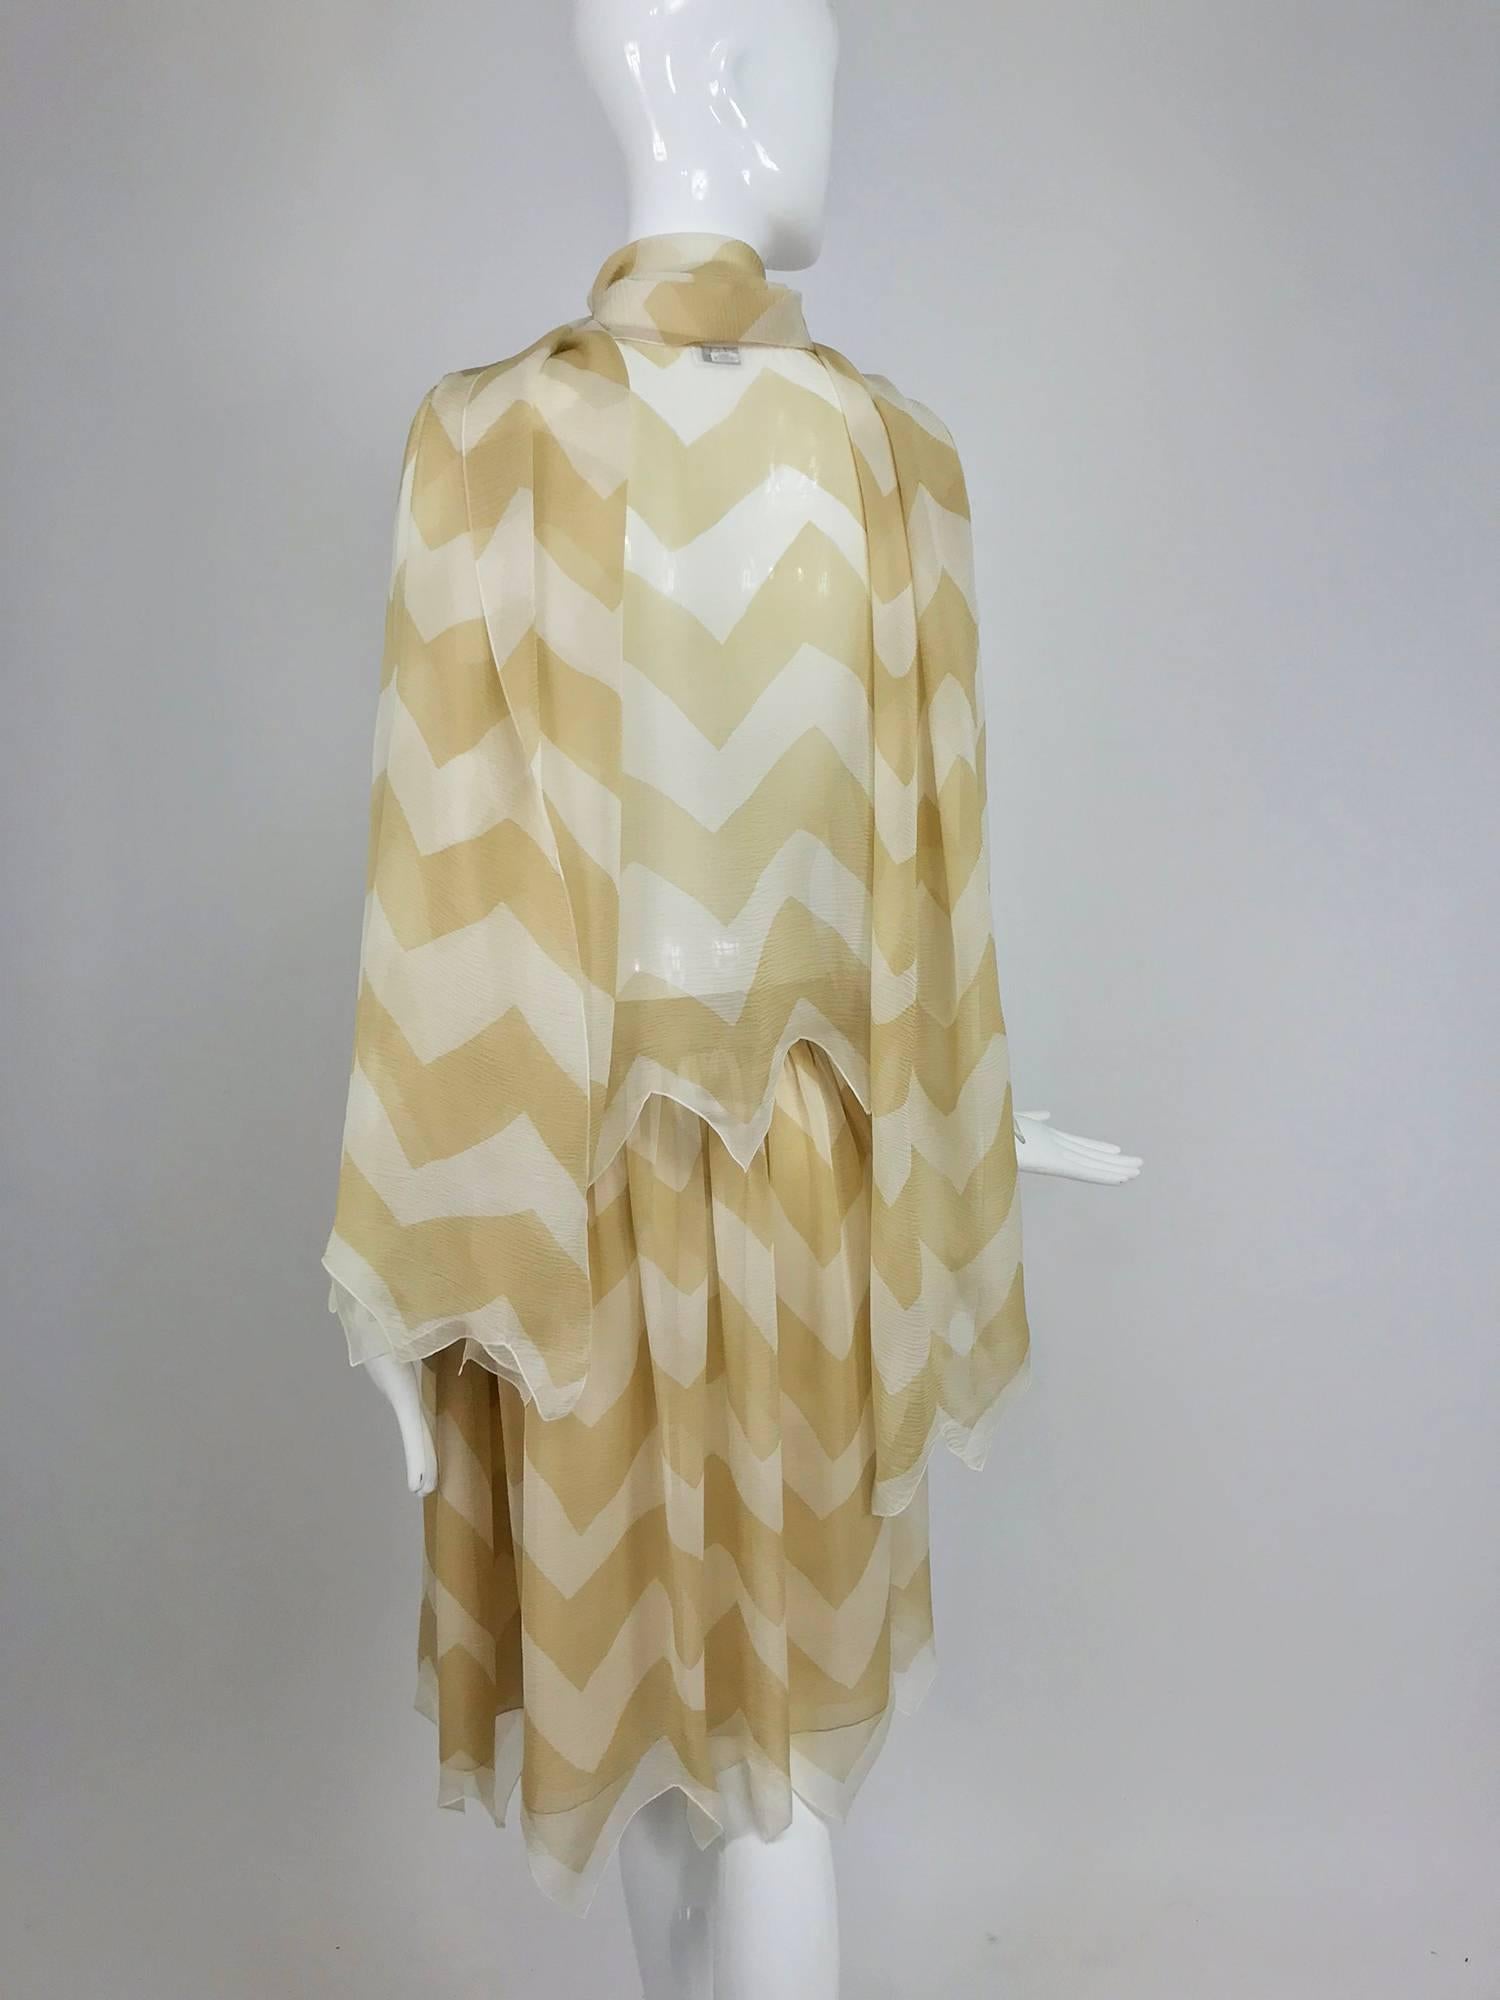 Chanel tan and cream zig zag silk chiffon blouse and skirt 2000A 1